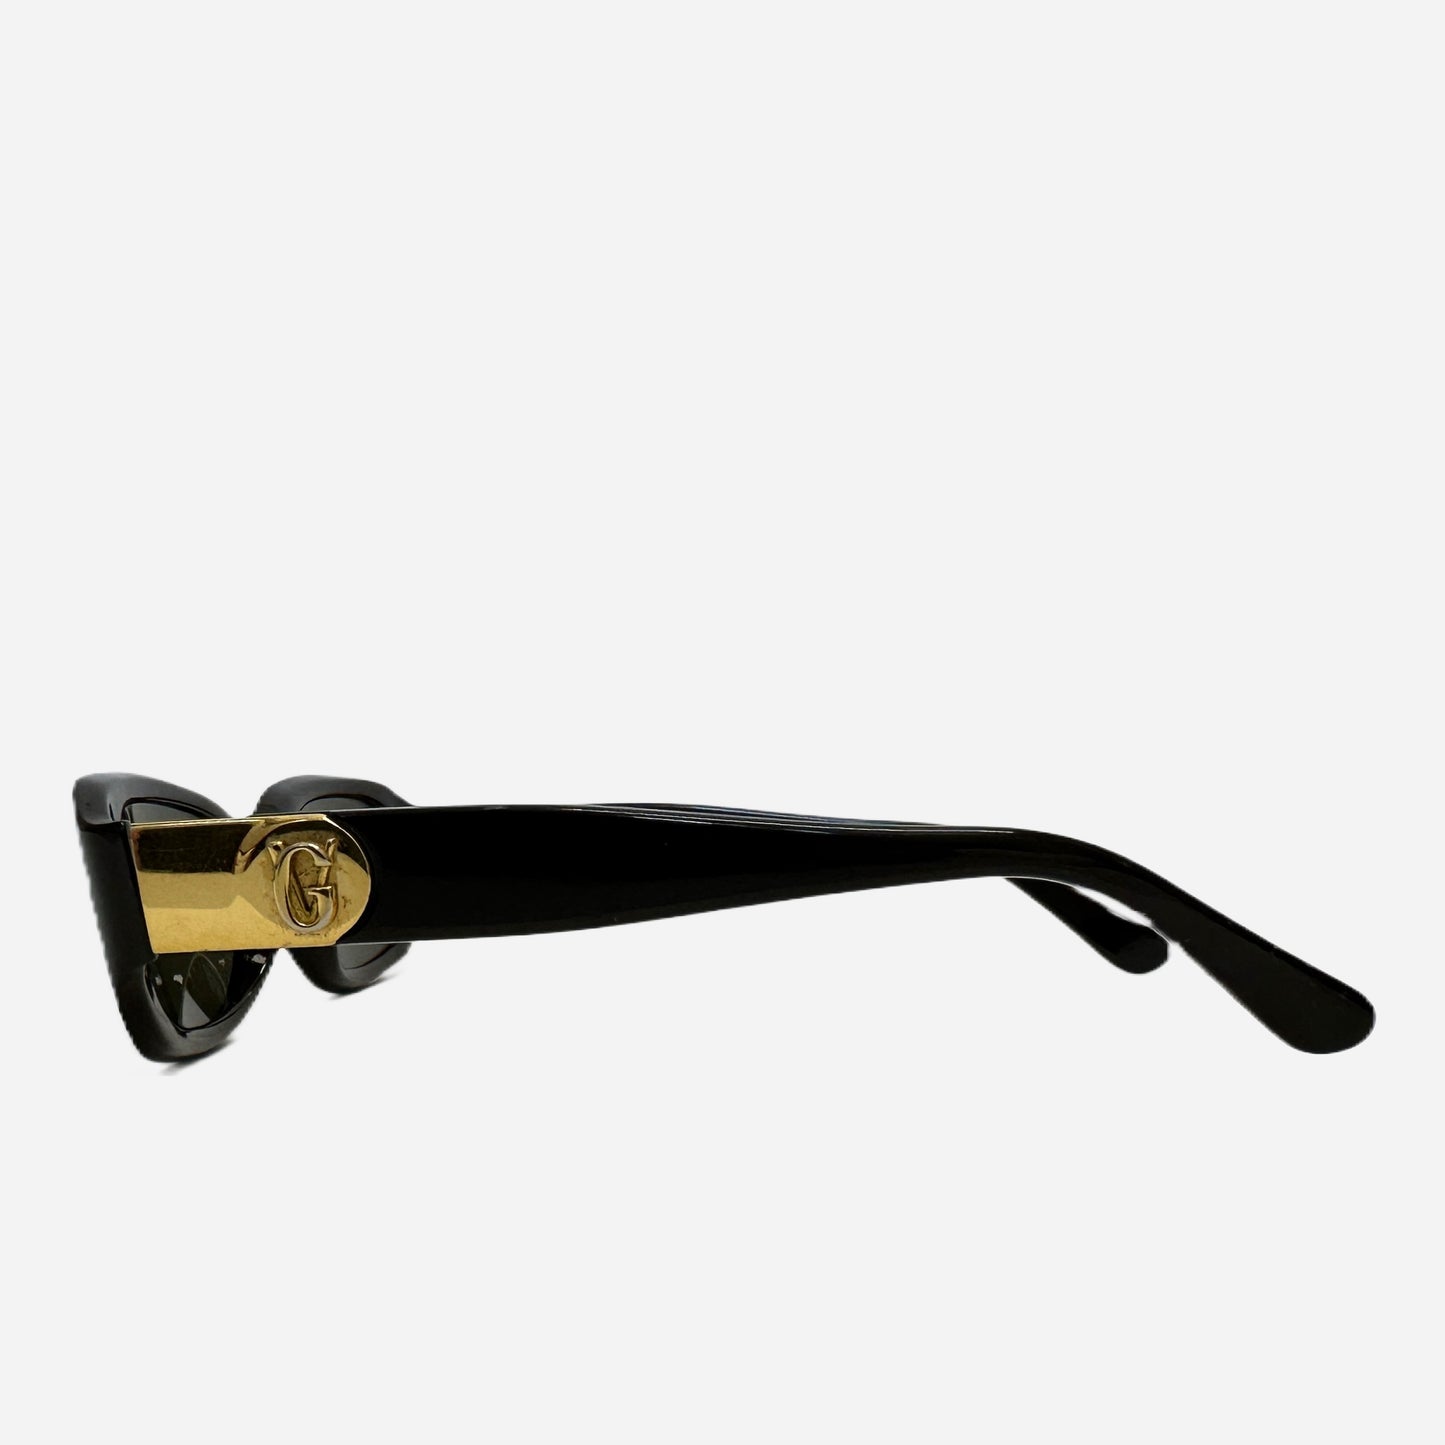 Vintage-Gianni-Versace-Sonnenbrille-Sunglasses-531-the-seekers-medusa-side